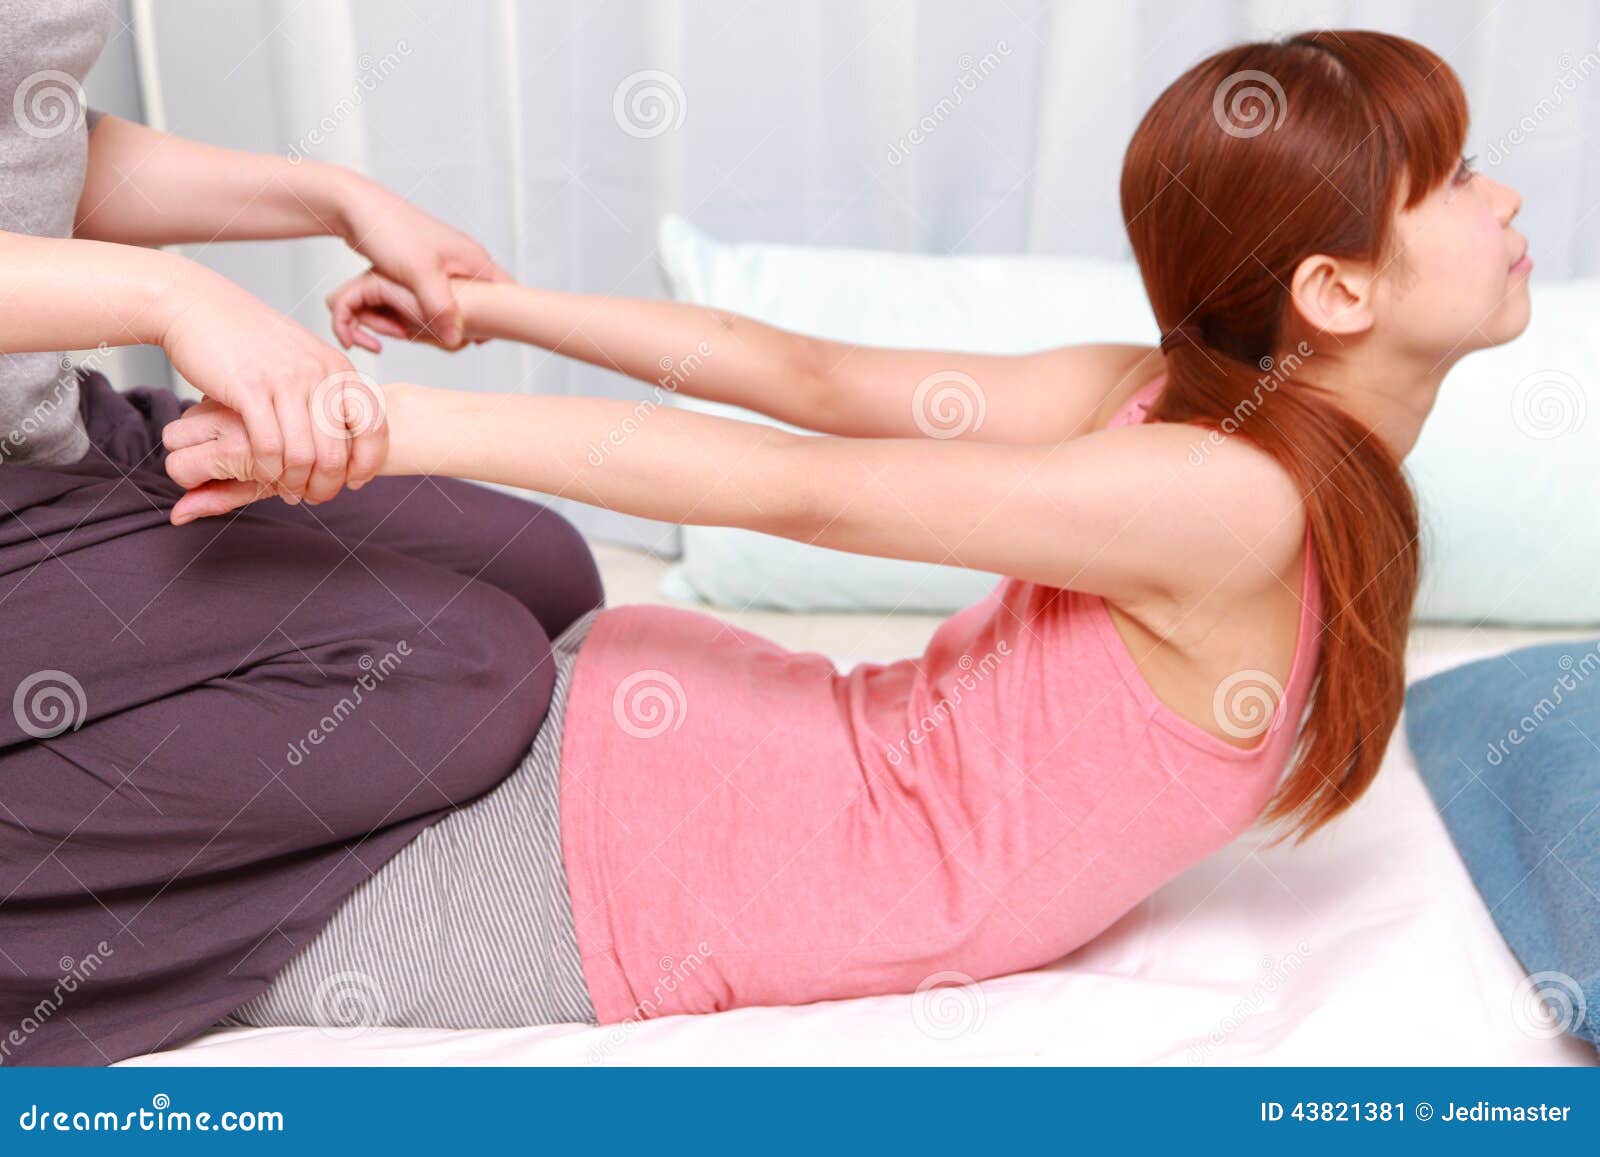 Japanese Woman Getting Thai Massage Stock Image Image Of Medic